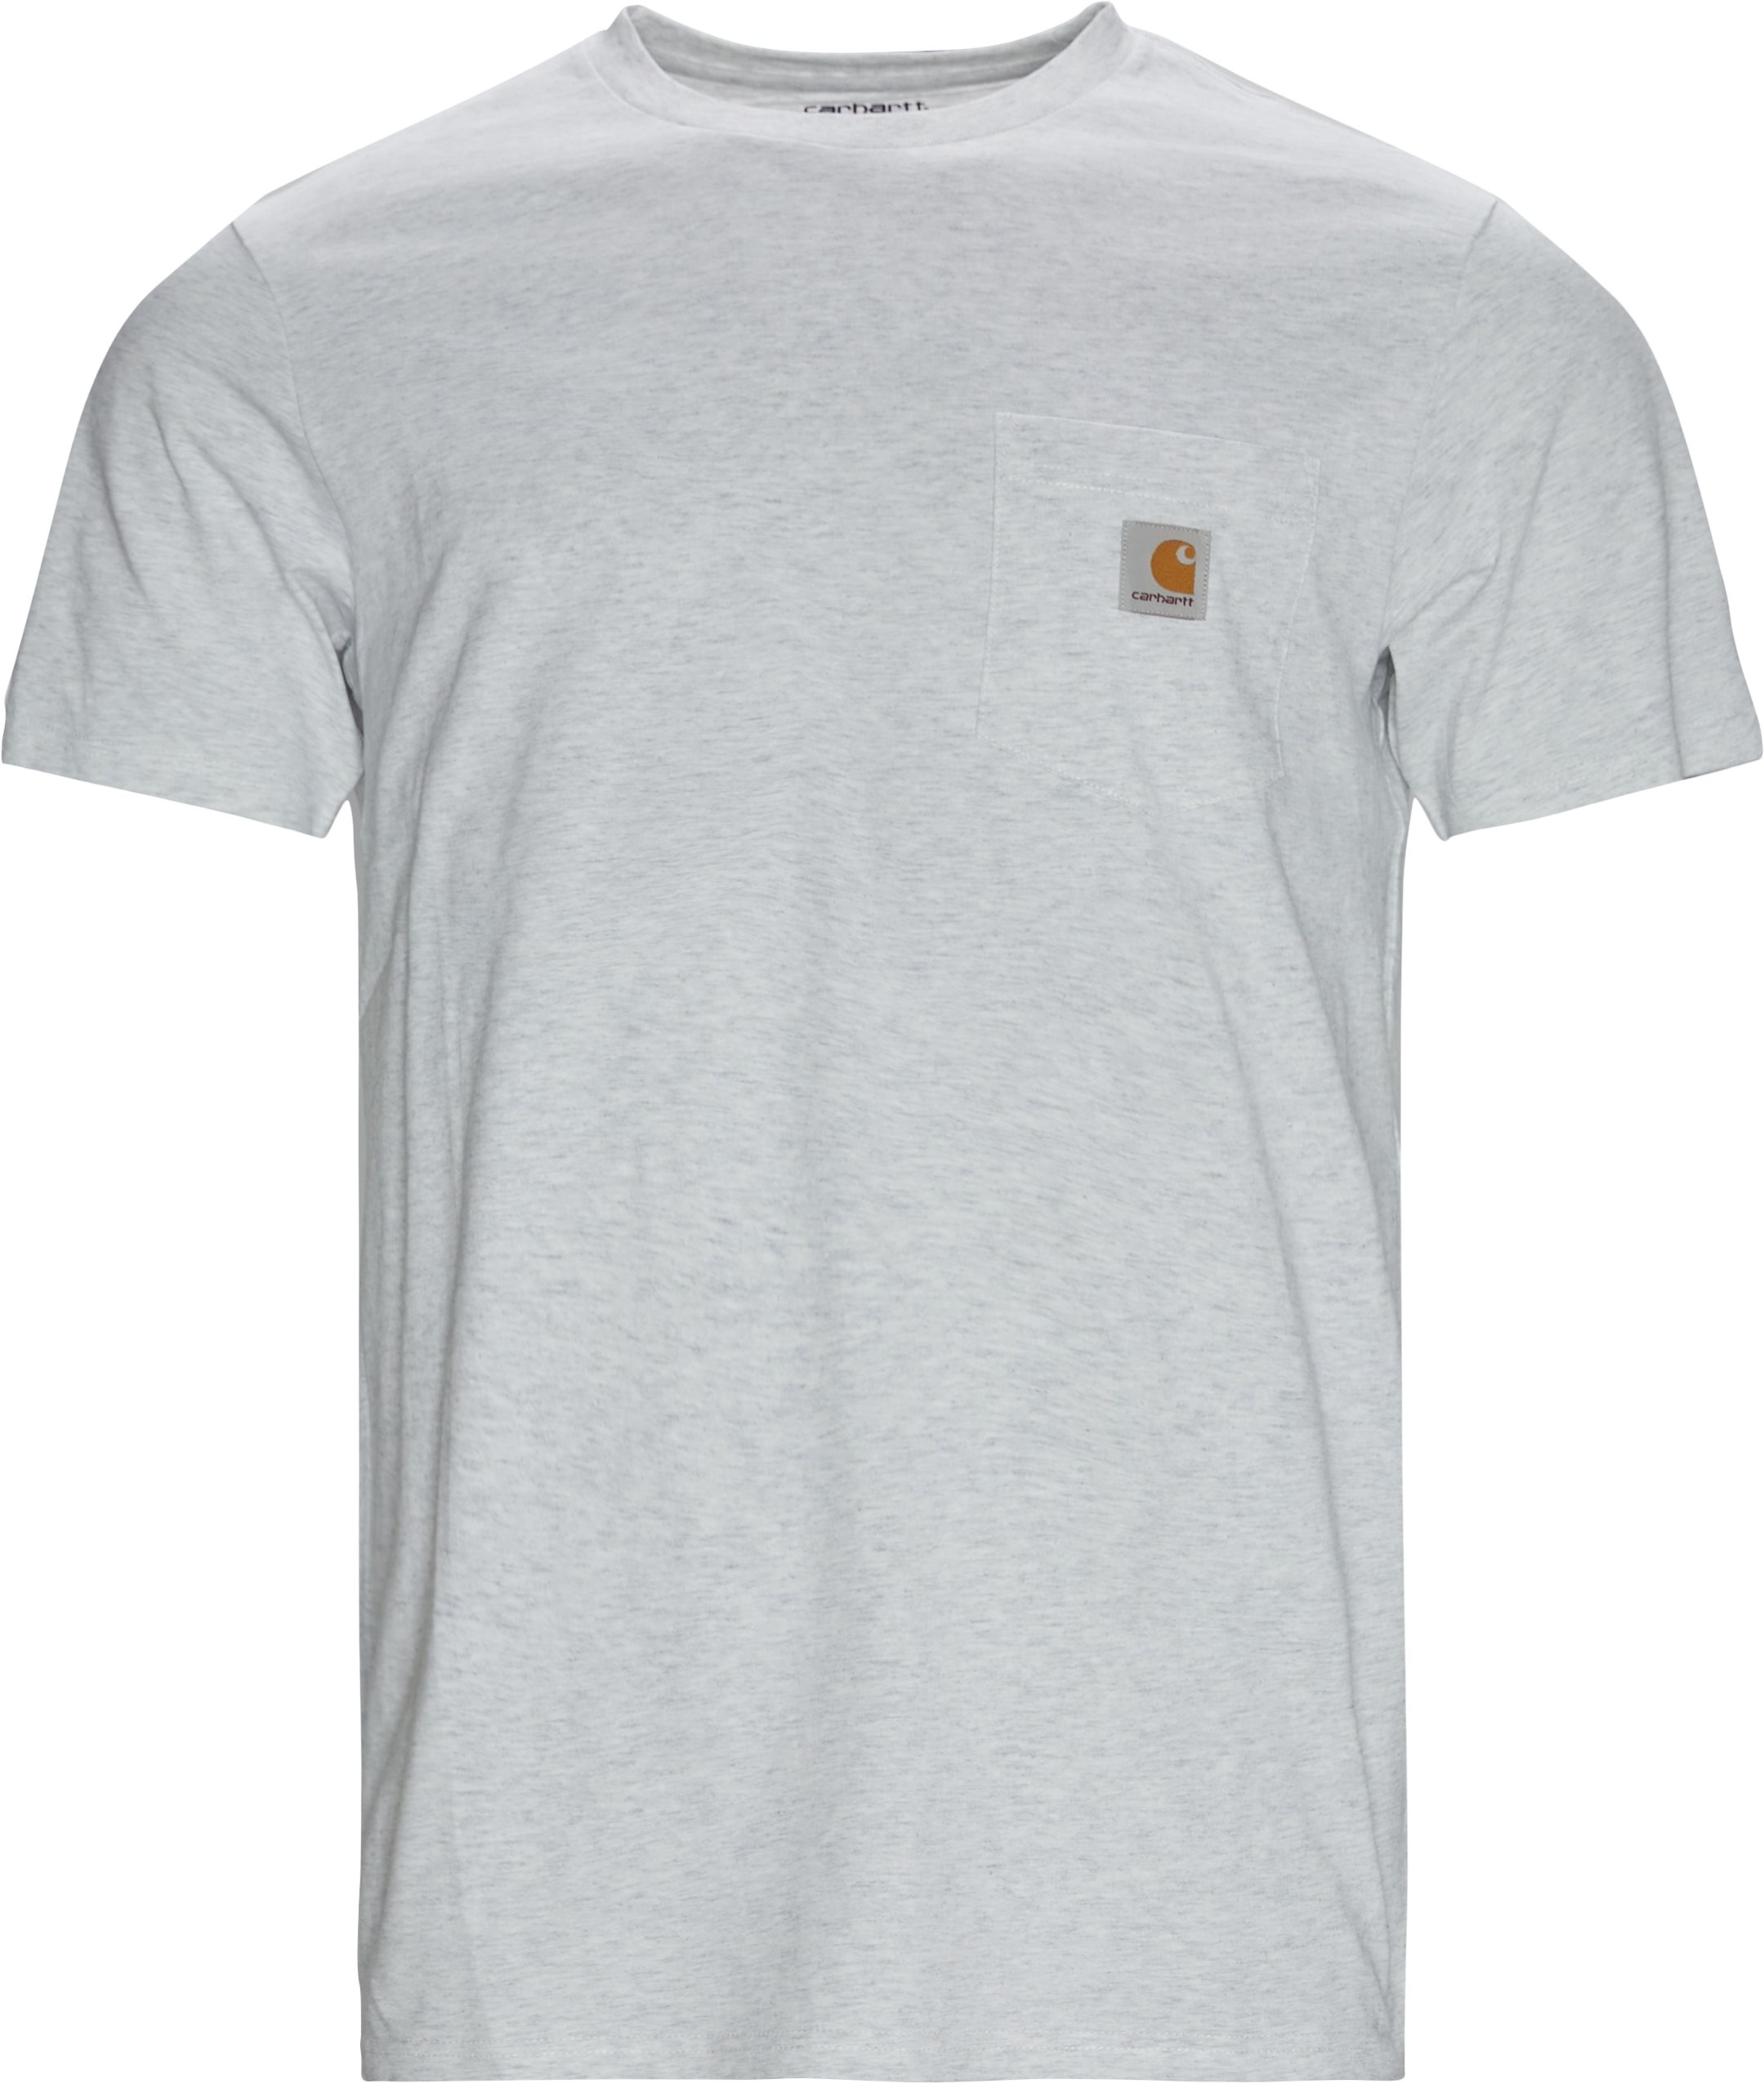 Pocket Tee - T-shirts - Regular fit - Grey